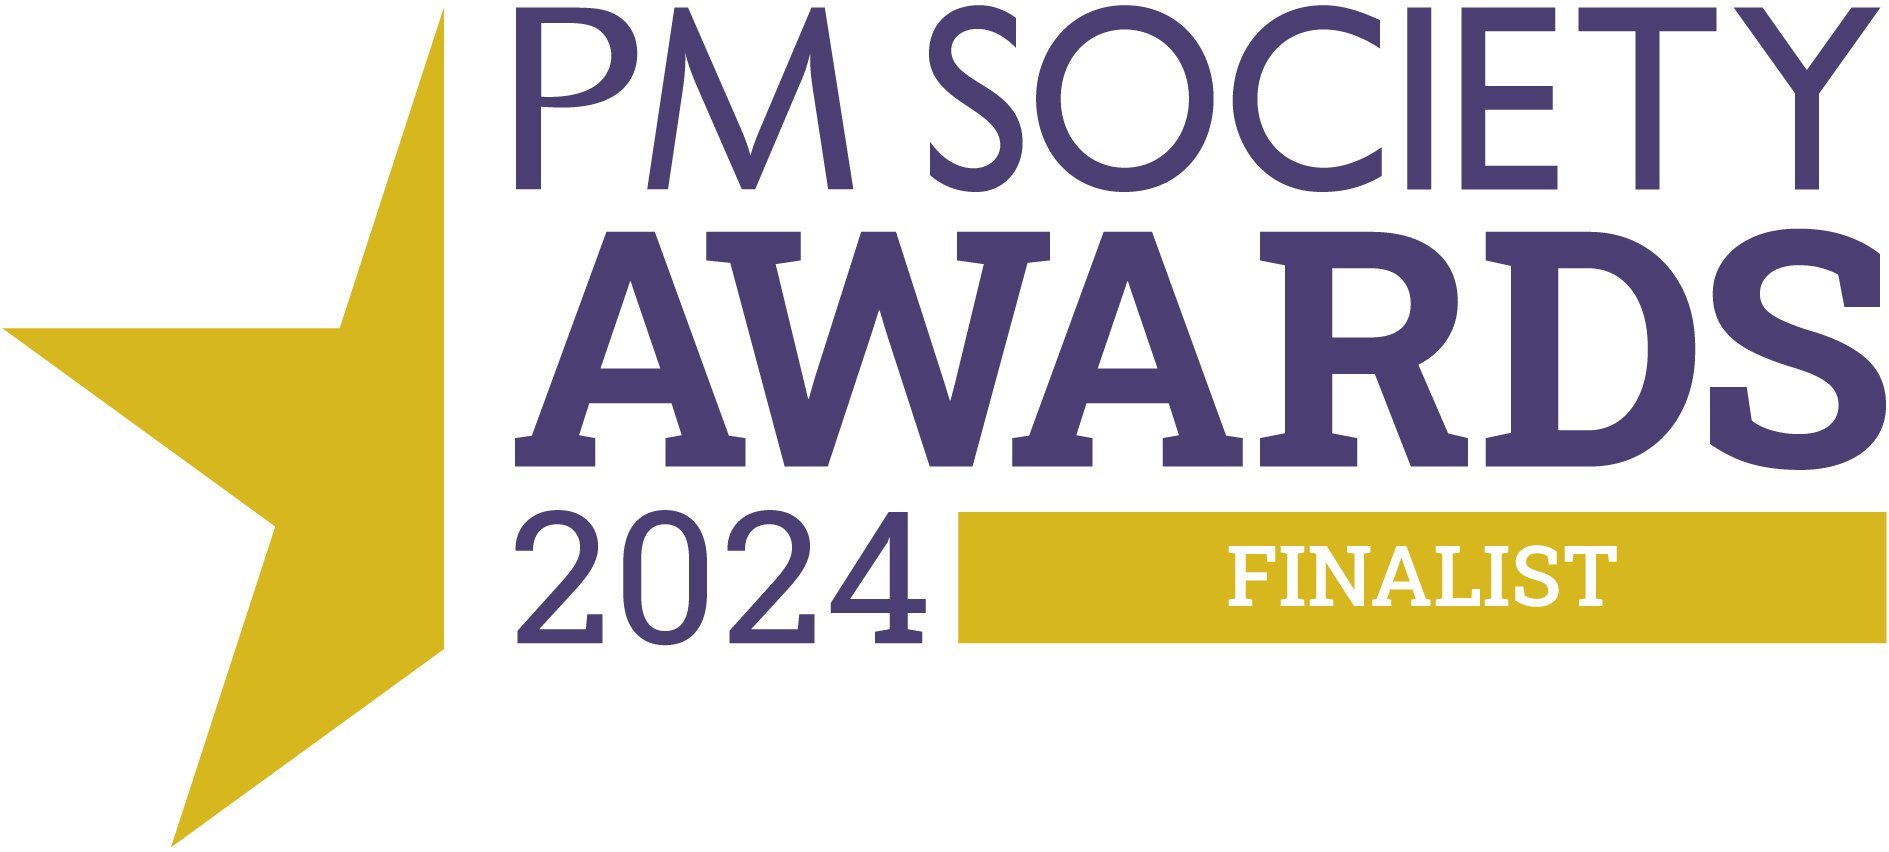 PM Society Awards 24 Finalist.jpg